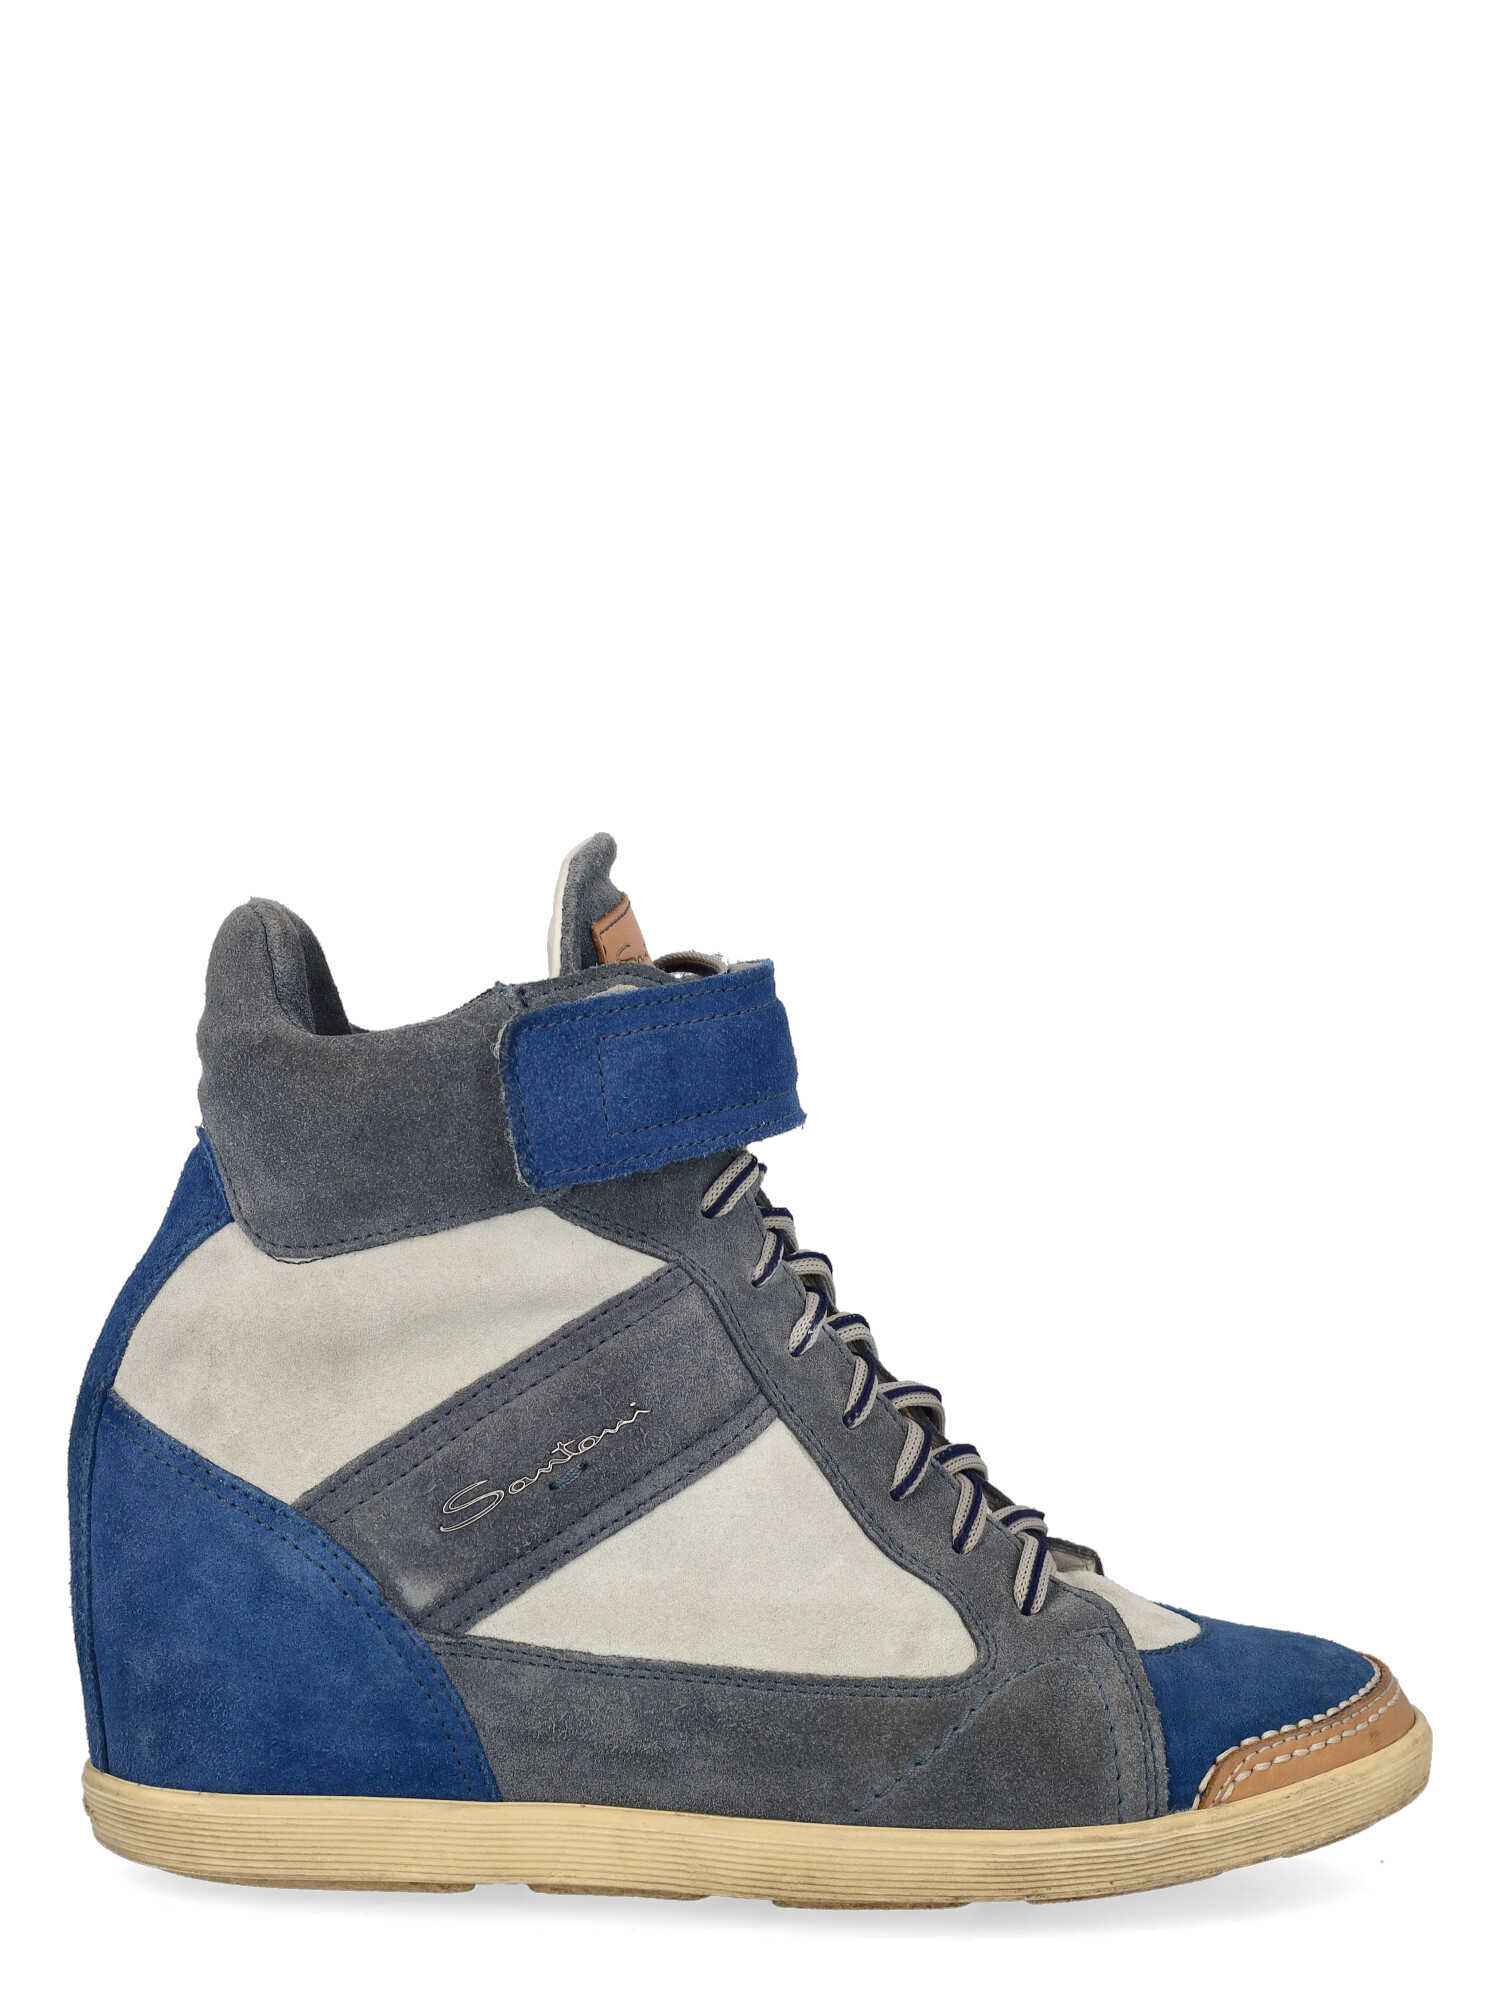 Santoni Femme Sneakers Grey, Navy Leather